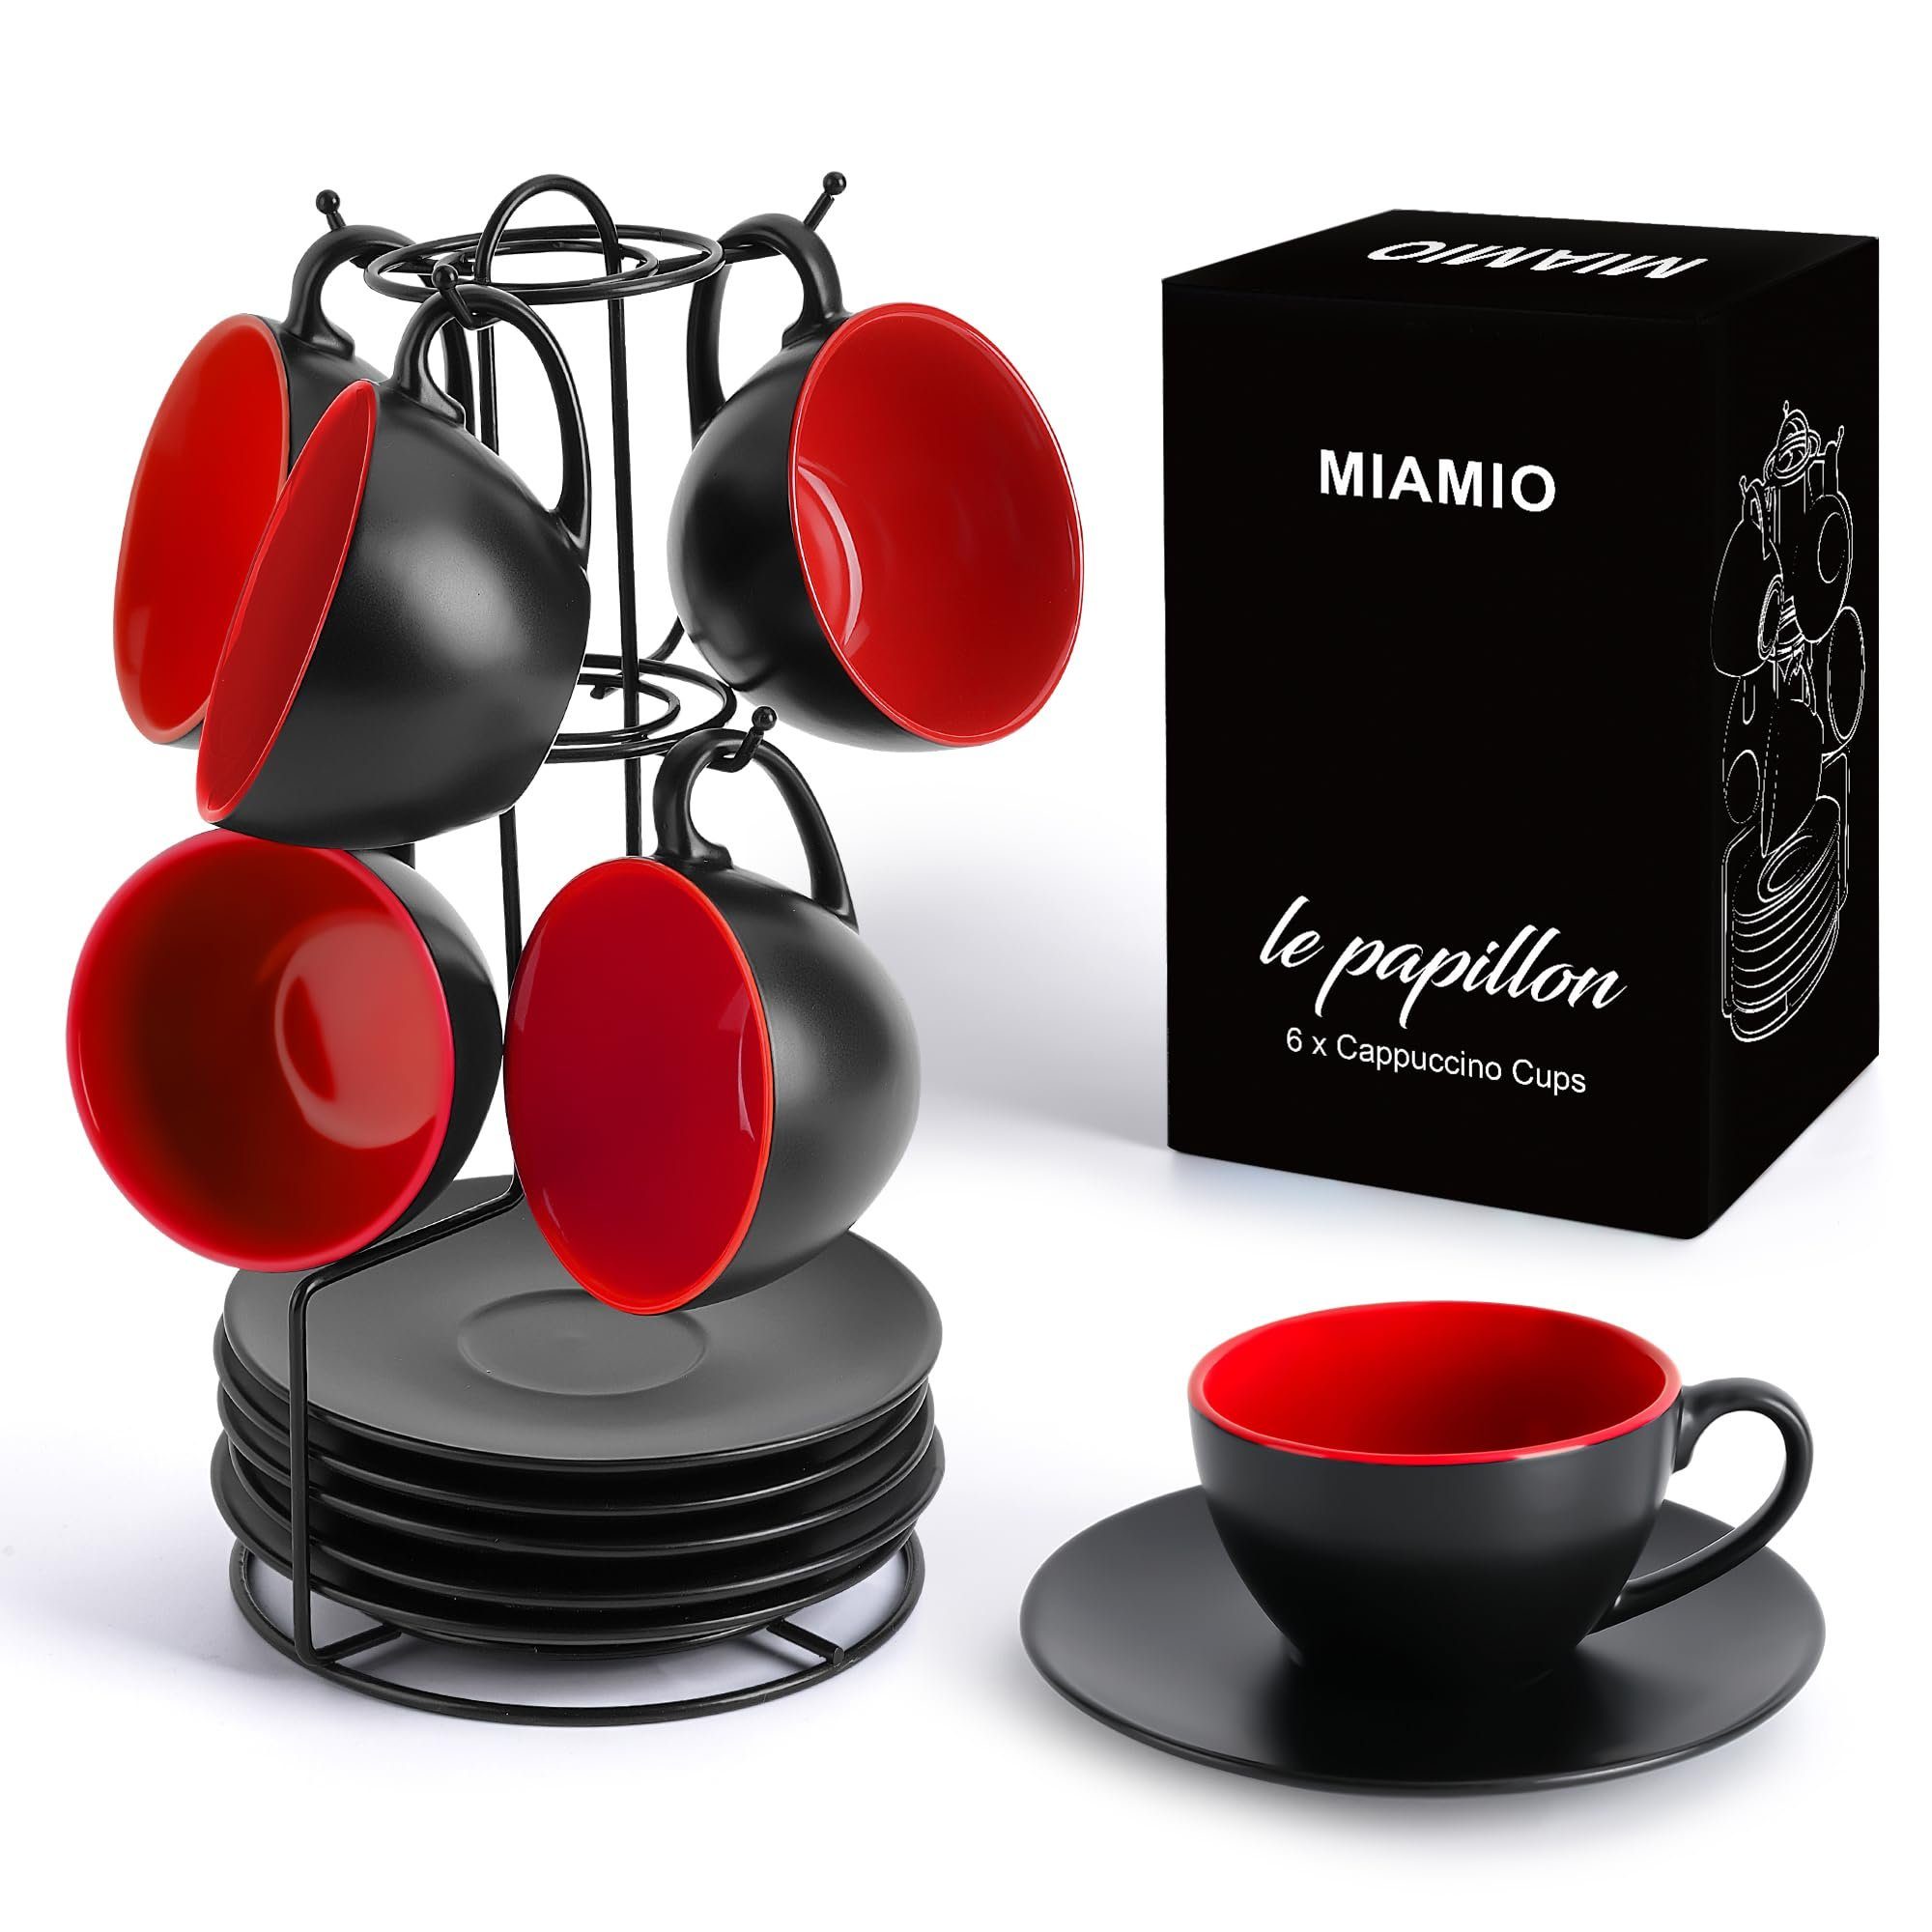 MiaMio Cappuccinotasse Чашки для капучино Set, Cappuccino Tasse (Innen Rot)